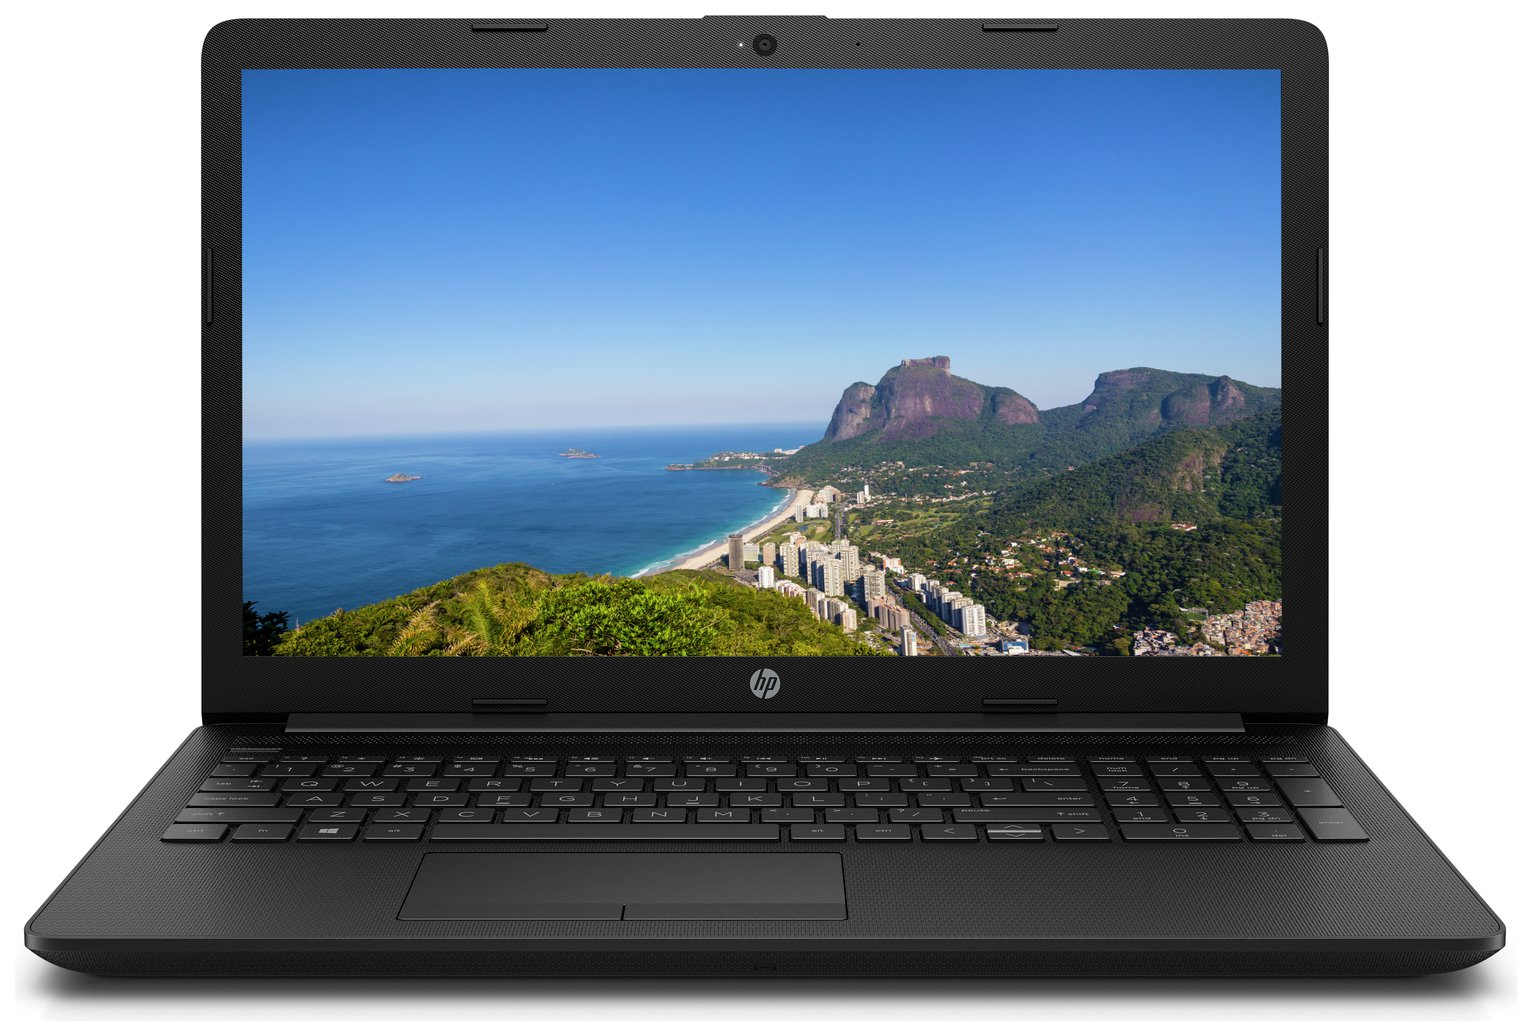 HP 17.3 Inch Ryzen 3 8GB 1TB FHD Laptop - Black